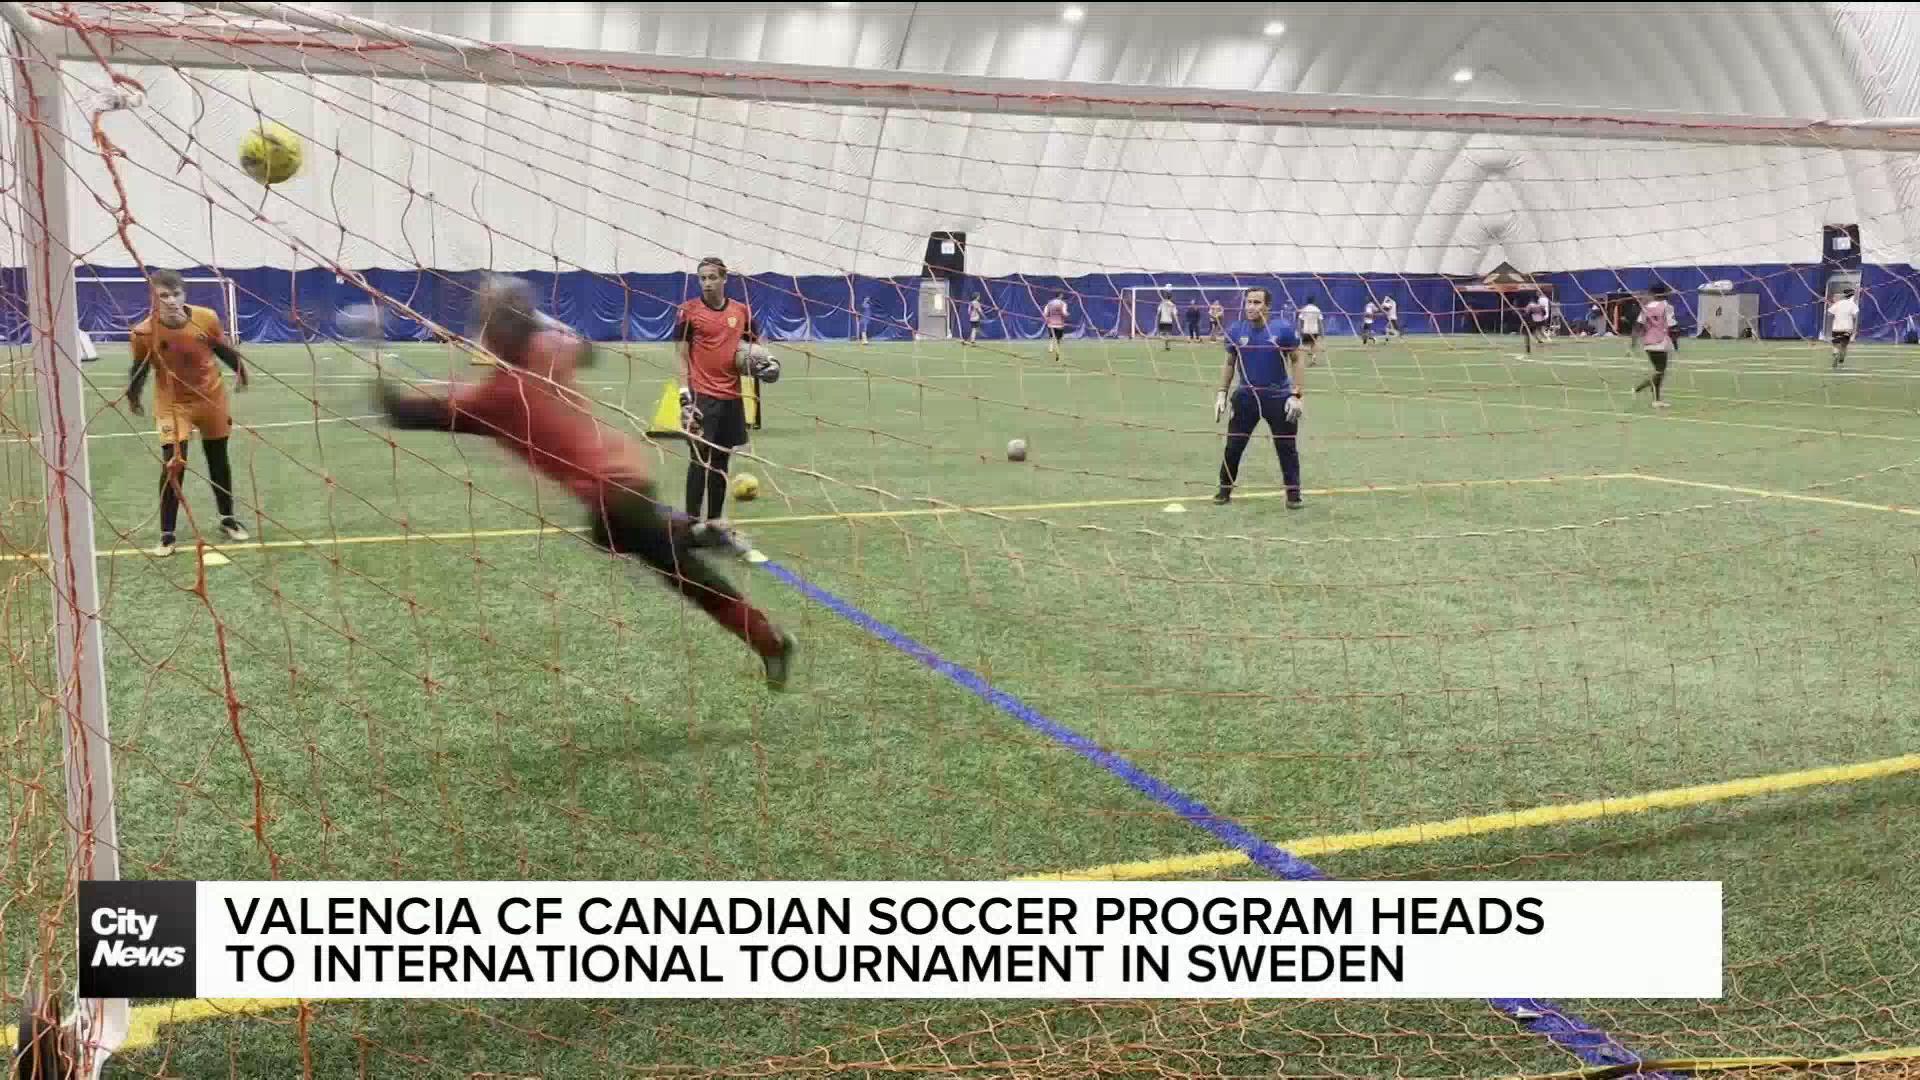 Valencia CF Canadian soccer academy heads Gothia Cup tournament